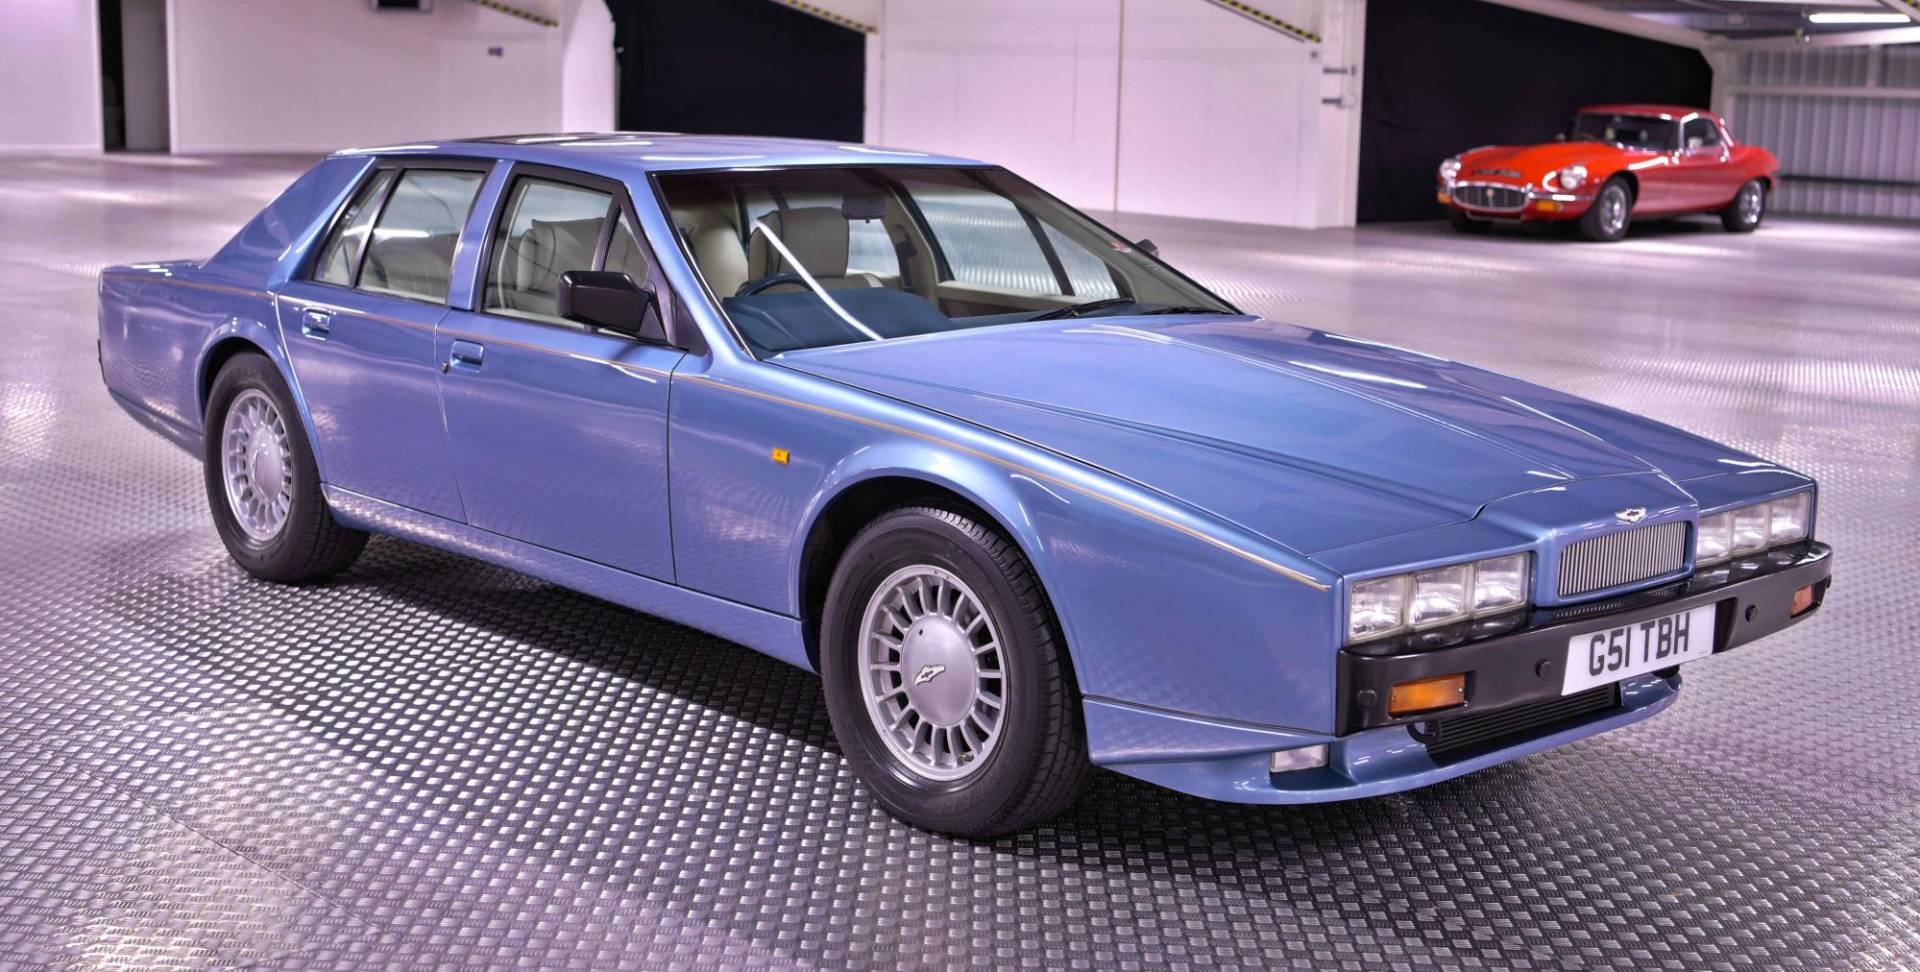 Aston Martin Lagonda 1989 Fur 140 018 Eur Kaufen